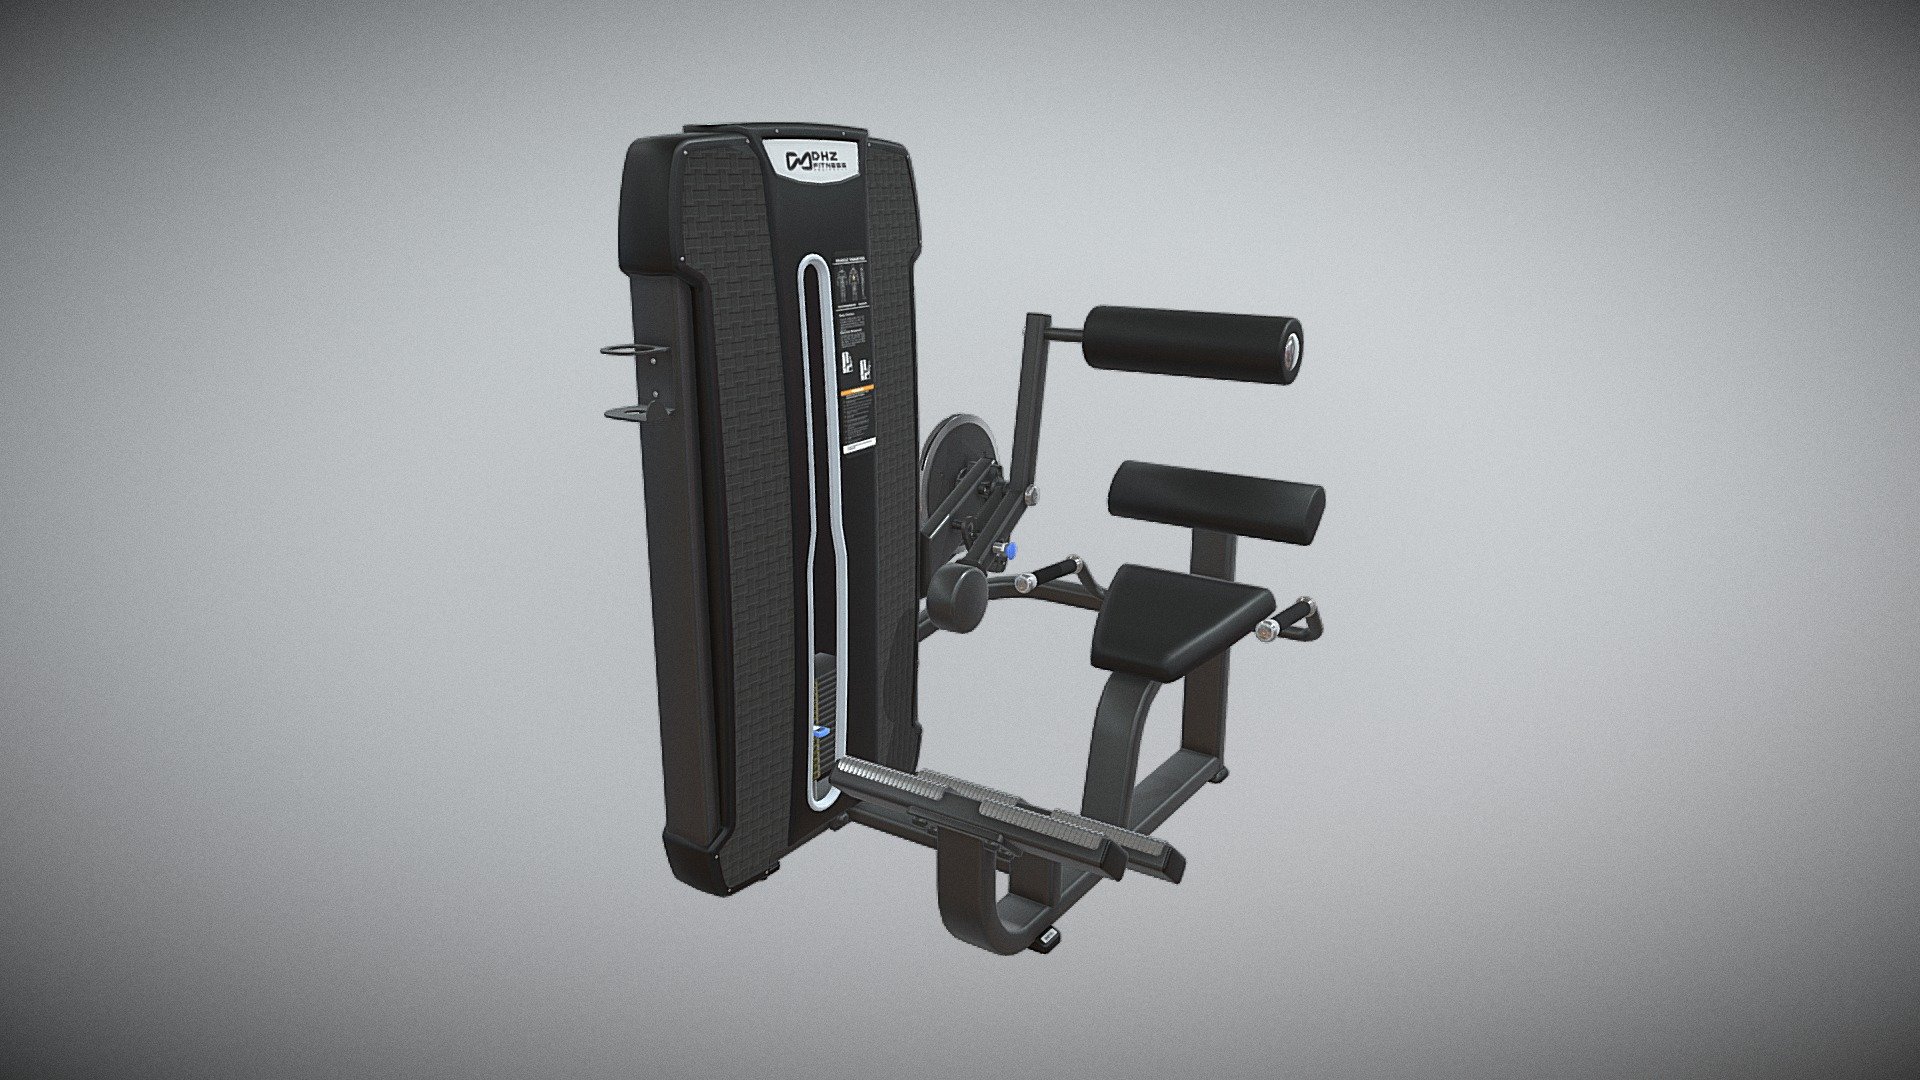 http://dhz-fitness.de/en/style-1#E4031 - BACK EXTENSION - 3D model by supersport-fitness 3d model